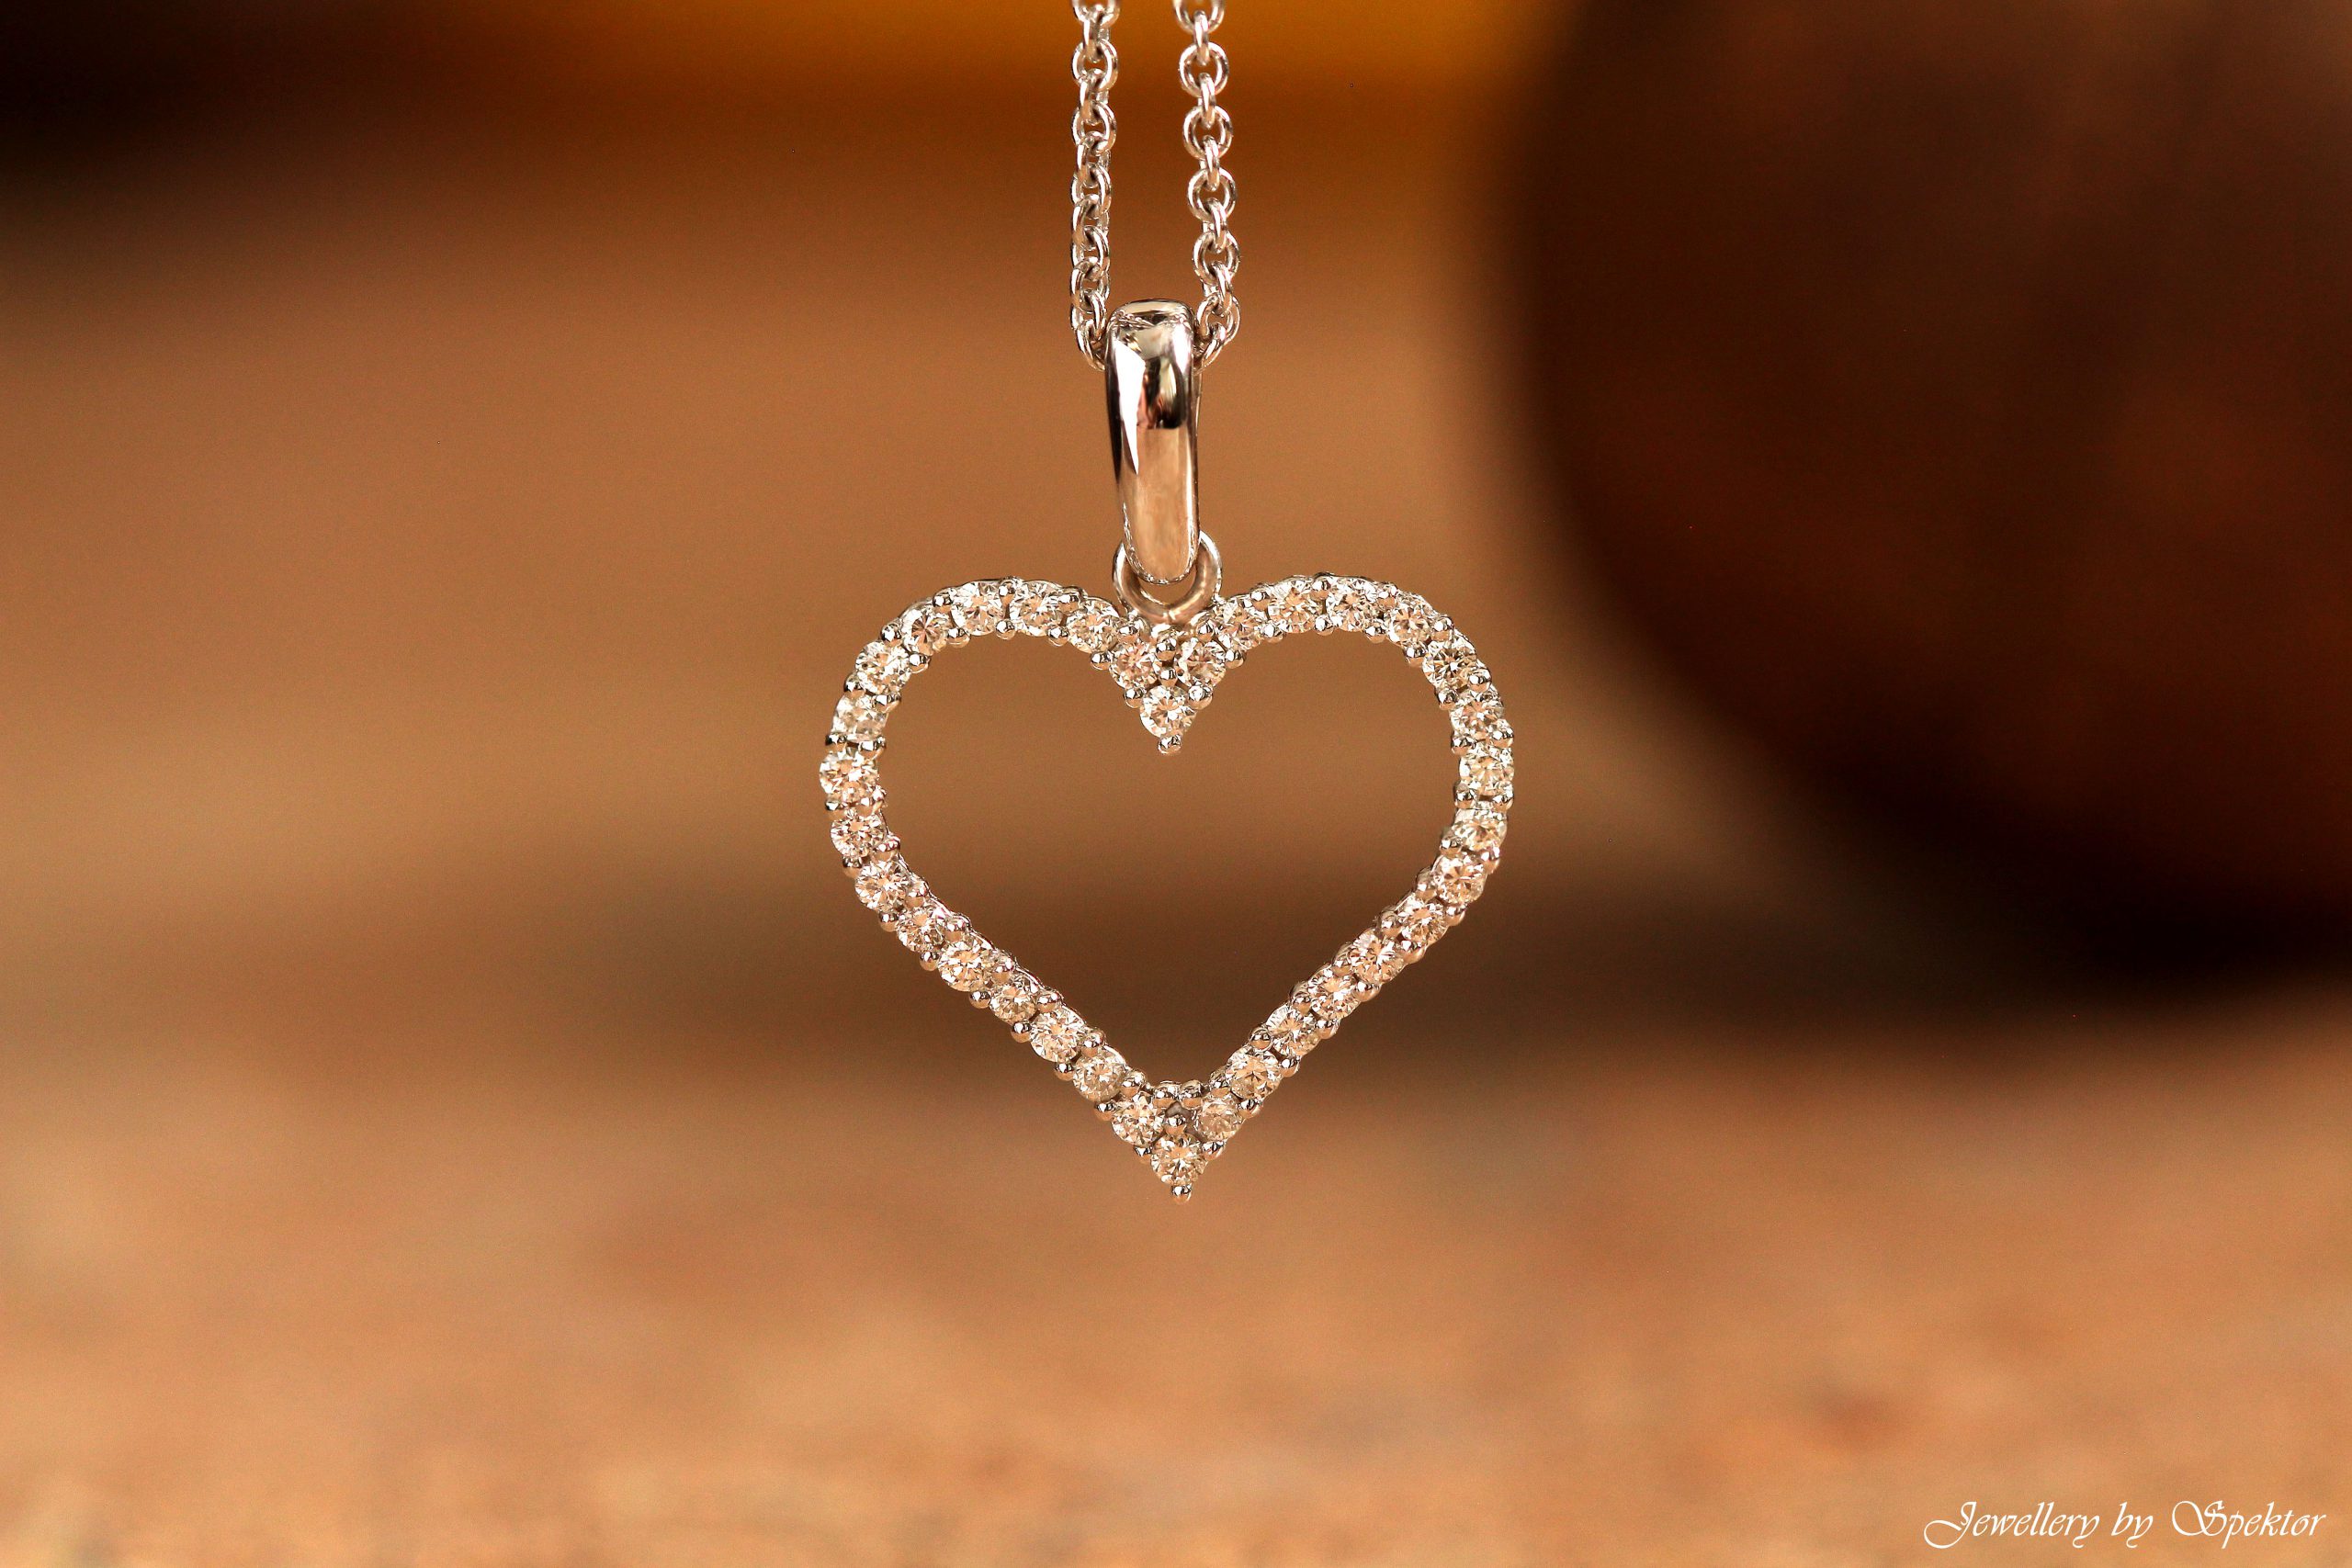 Buy 0.20ct Diamond Heart Pendant Necklace in 9K White Gold for Women,  Miracle Diamond Heart Pendant Necklace in 9ct Solid White Gold for Girls  Online in India - Etsy